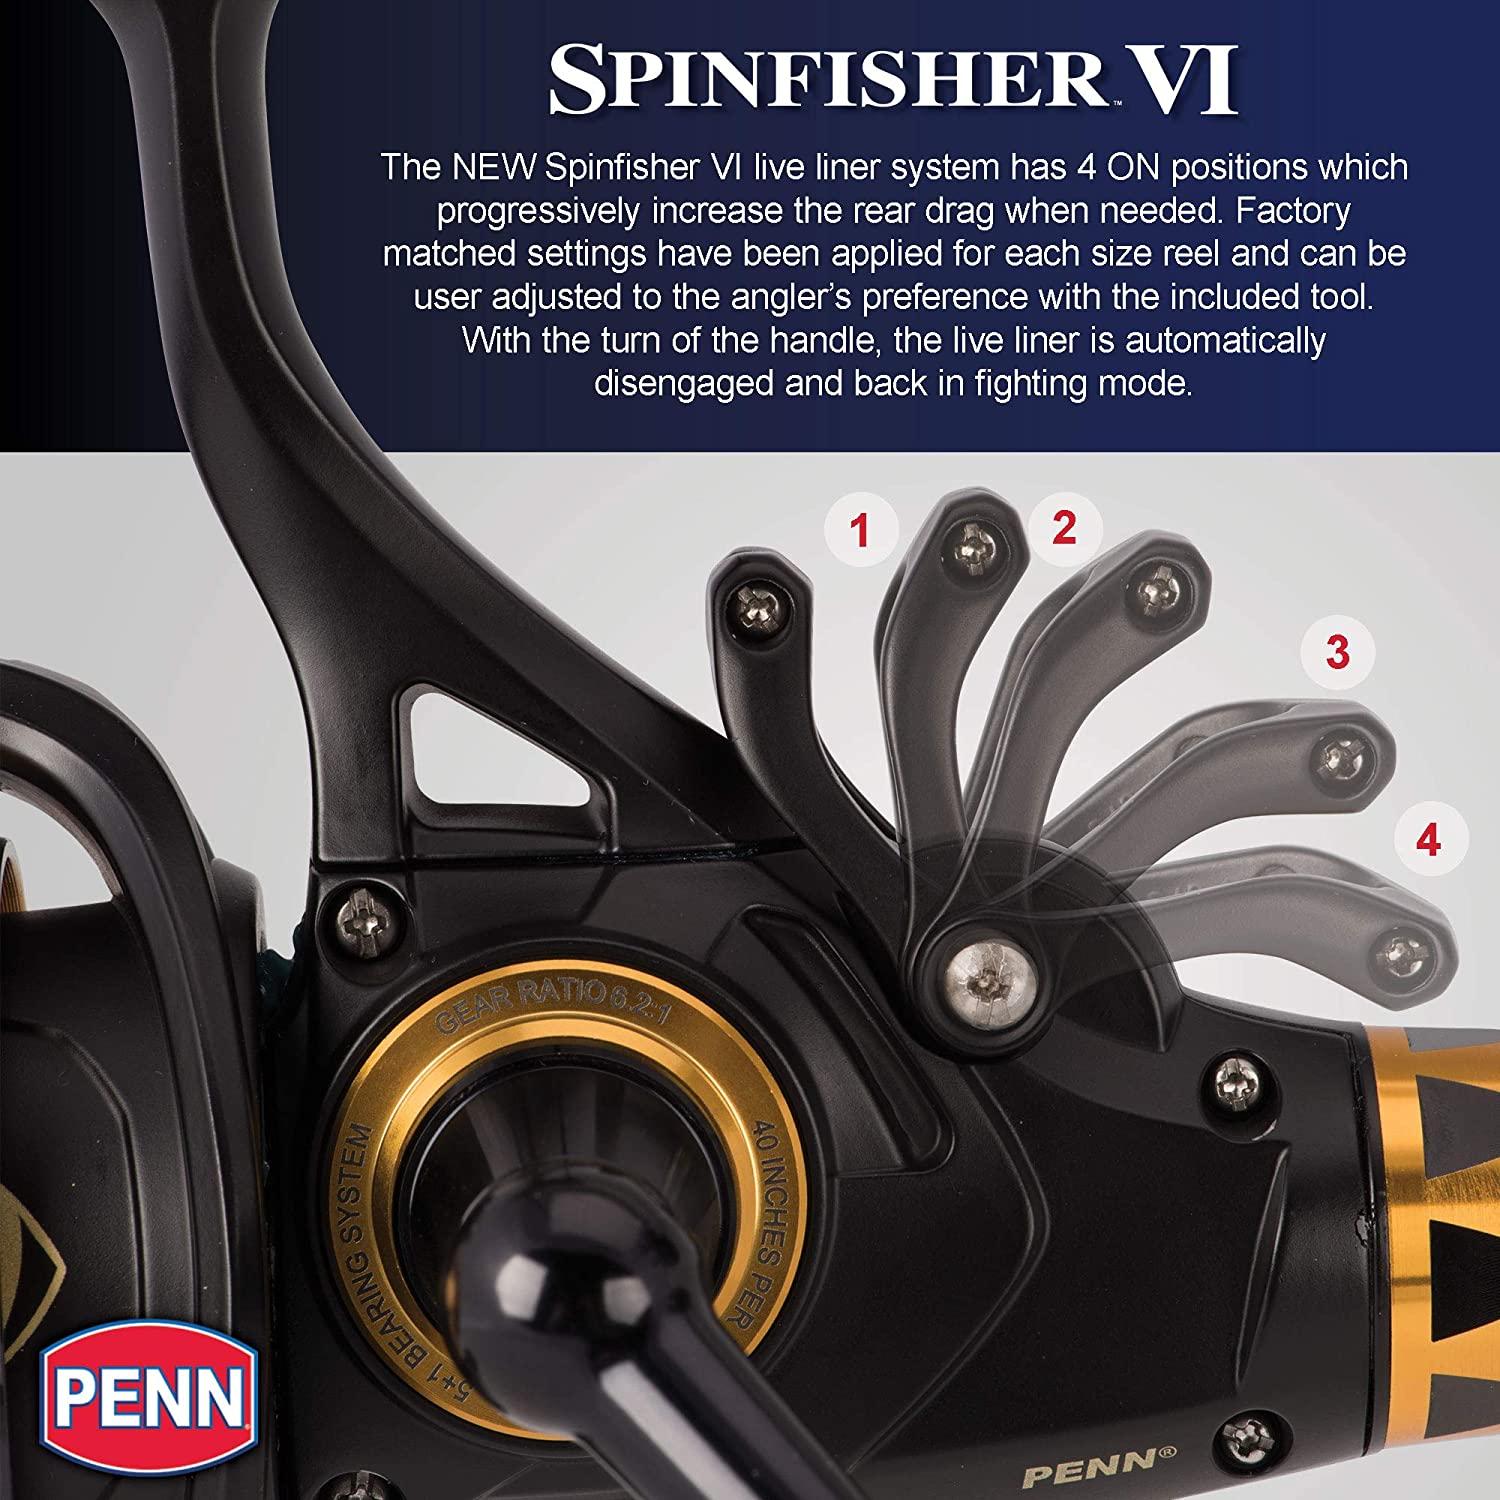 Penn Spinfisher VI Spinning Fishing Reel 4500 Spinfisher Vi